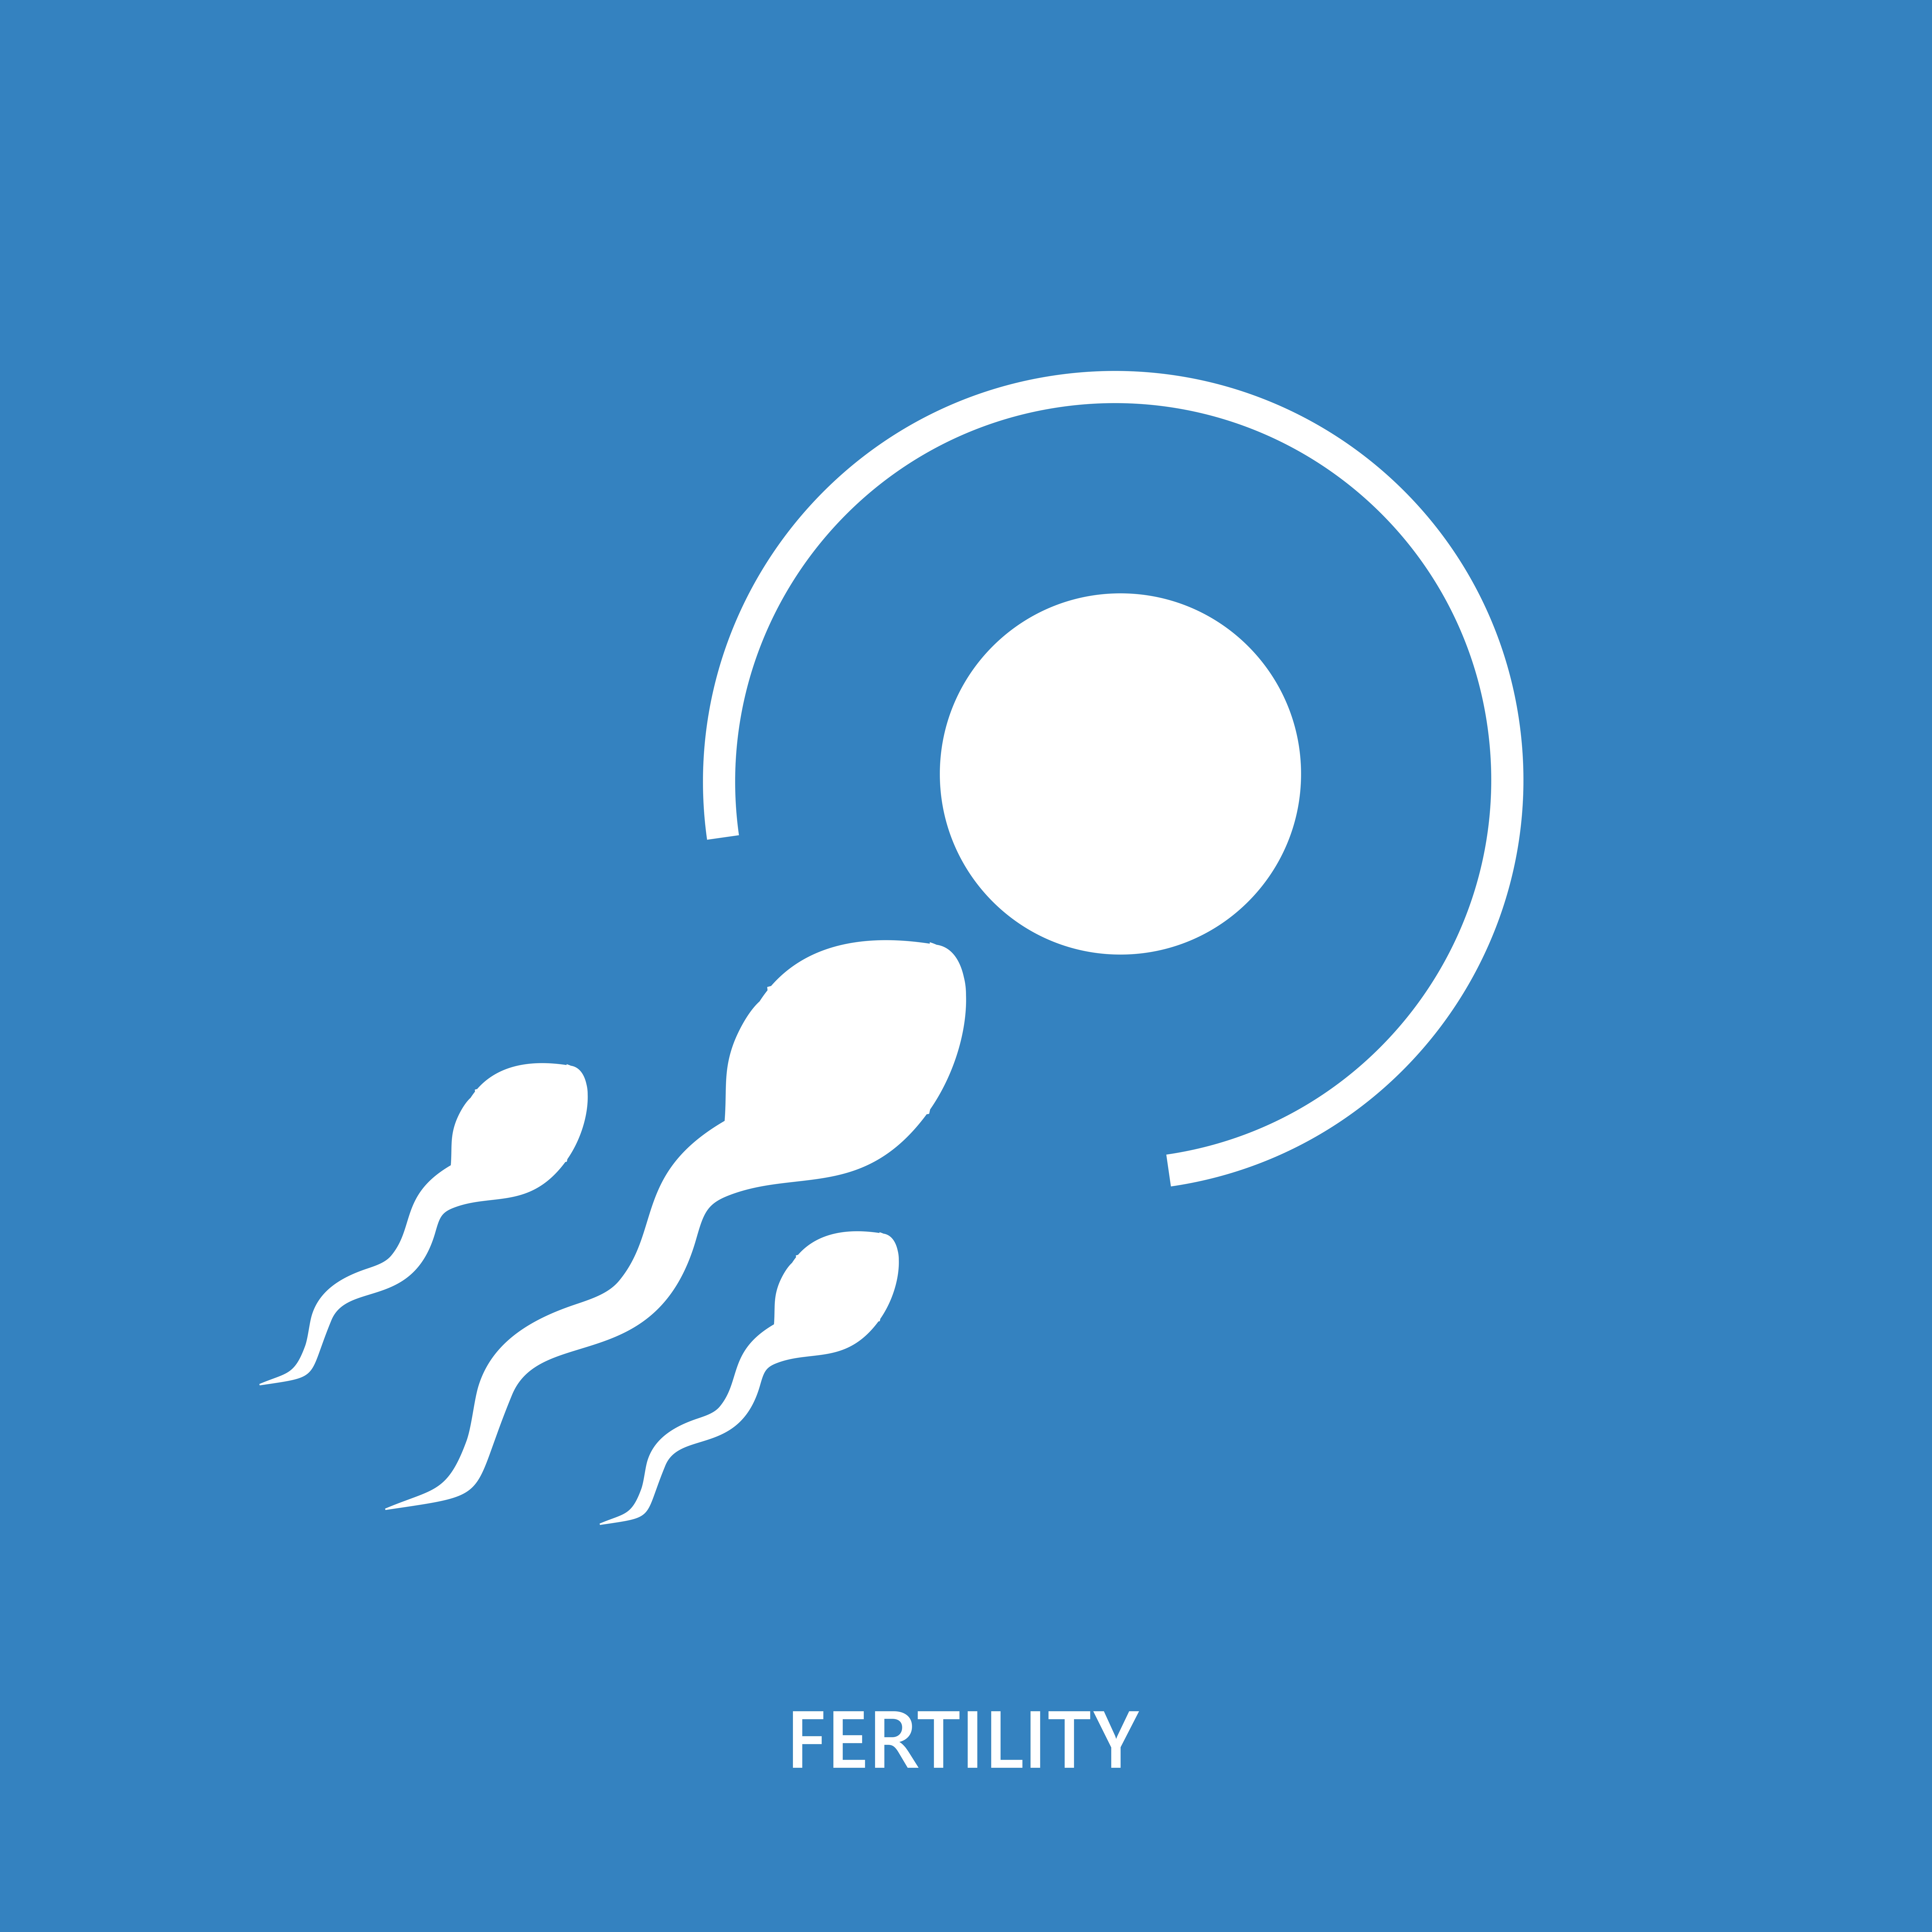 Fertility Image